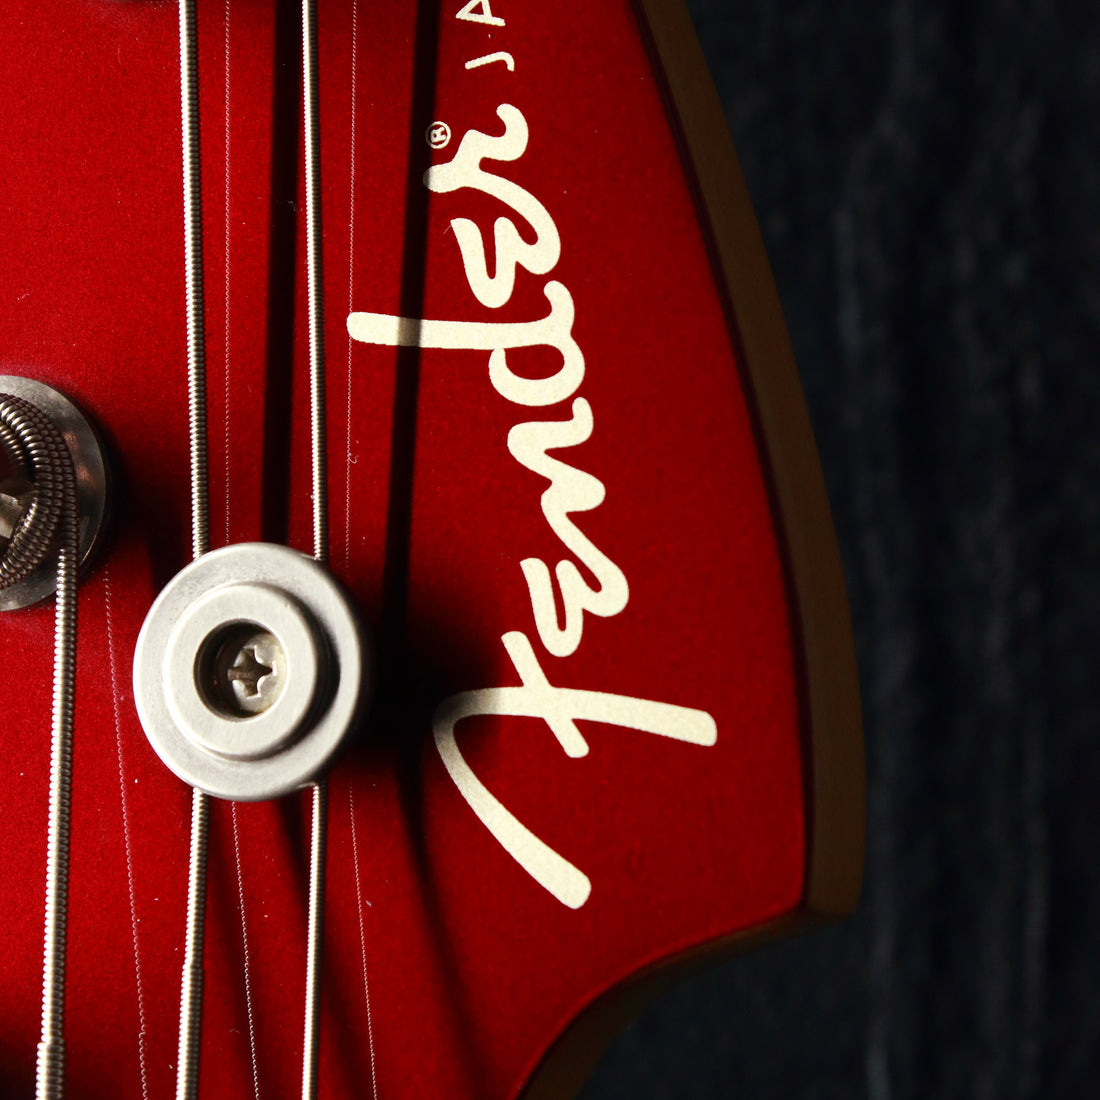 Fender Aerodyne Jazz Bass AJB-65 Old Candy Apple Red 2007